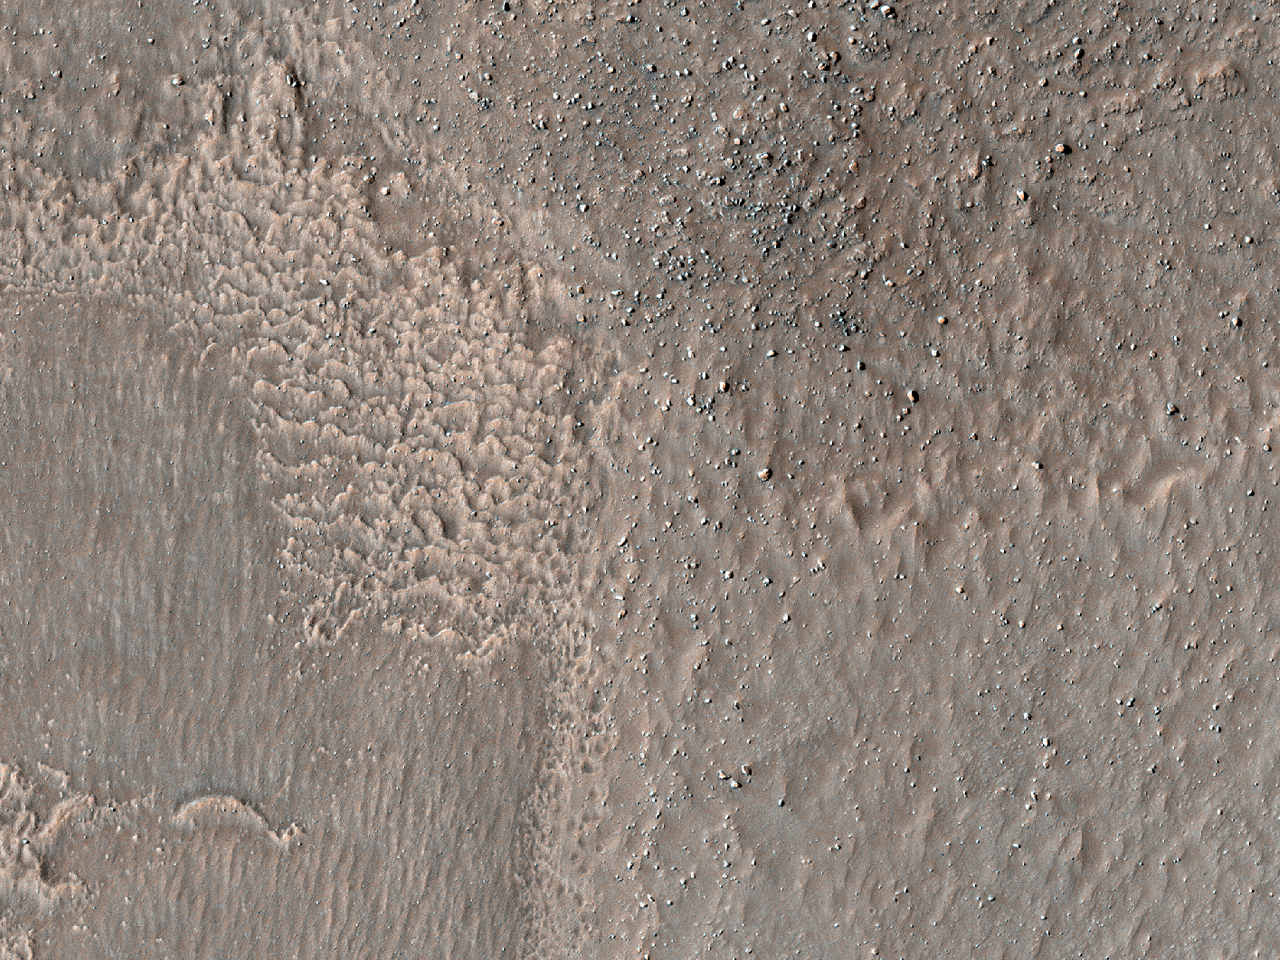 Formaci rica en olivina al nord dArgyre Planitia